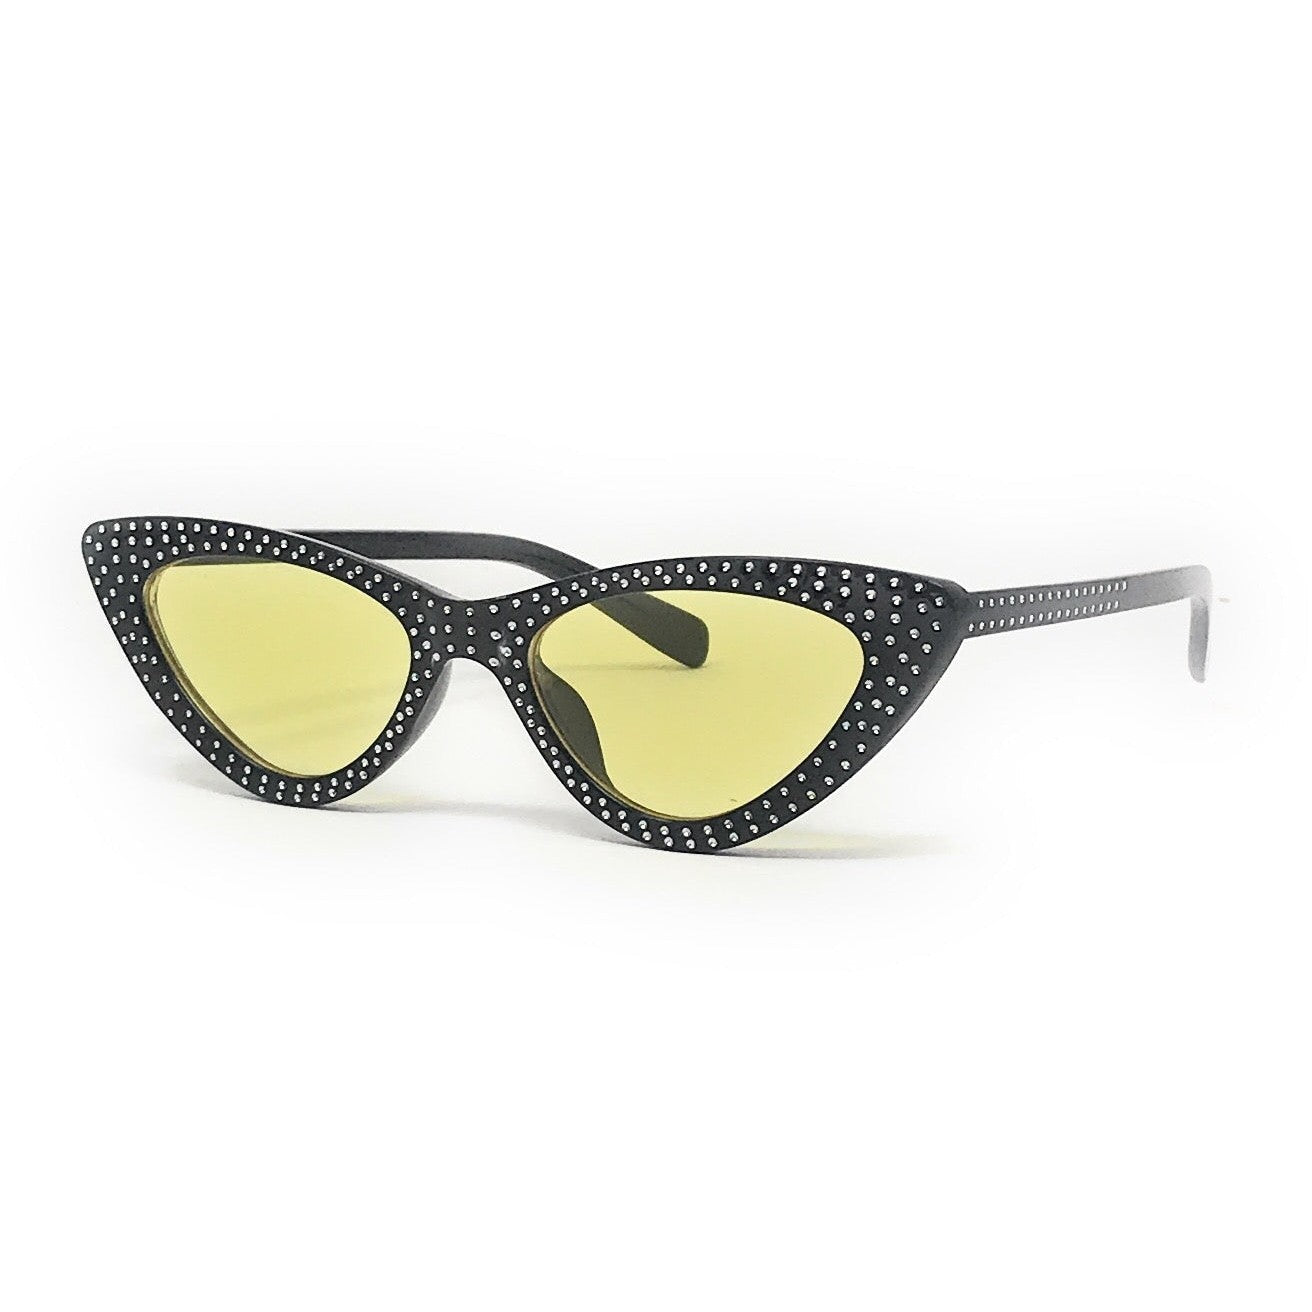 Black and White Polka Dot Yellow Lense 1950s Vintage Sunglasses